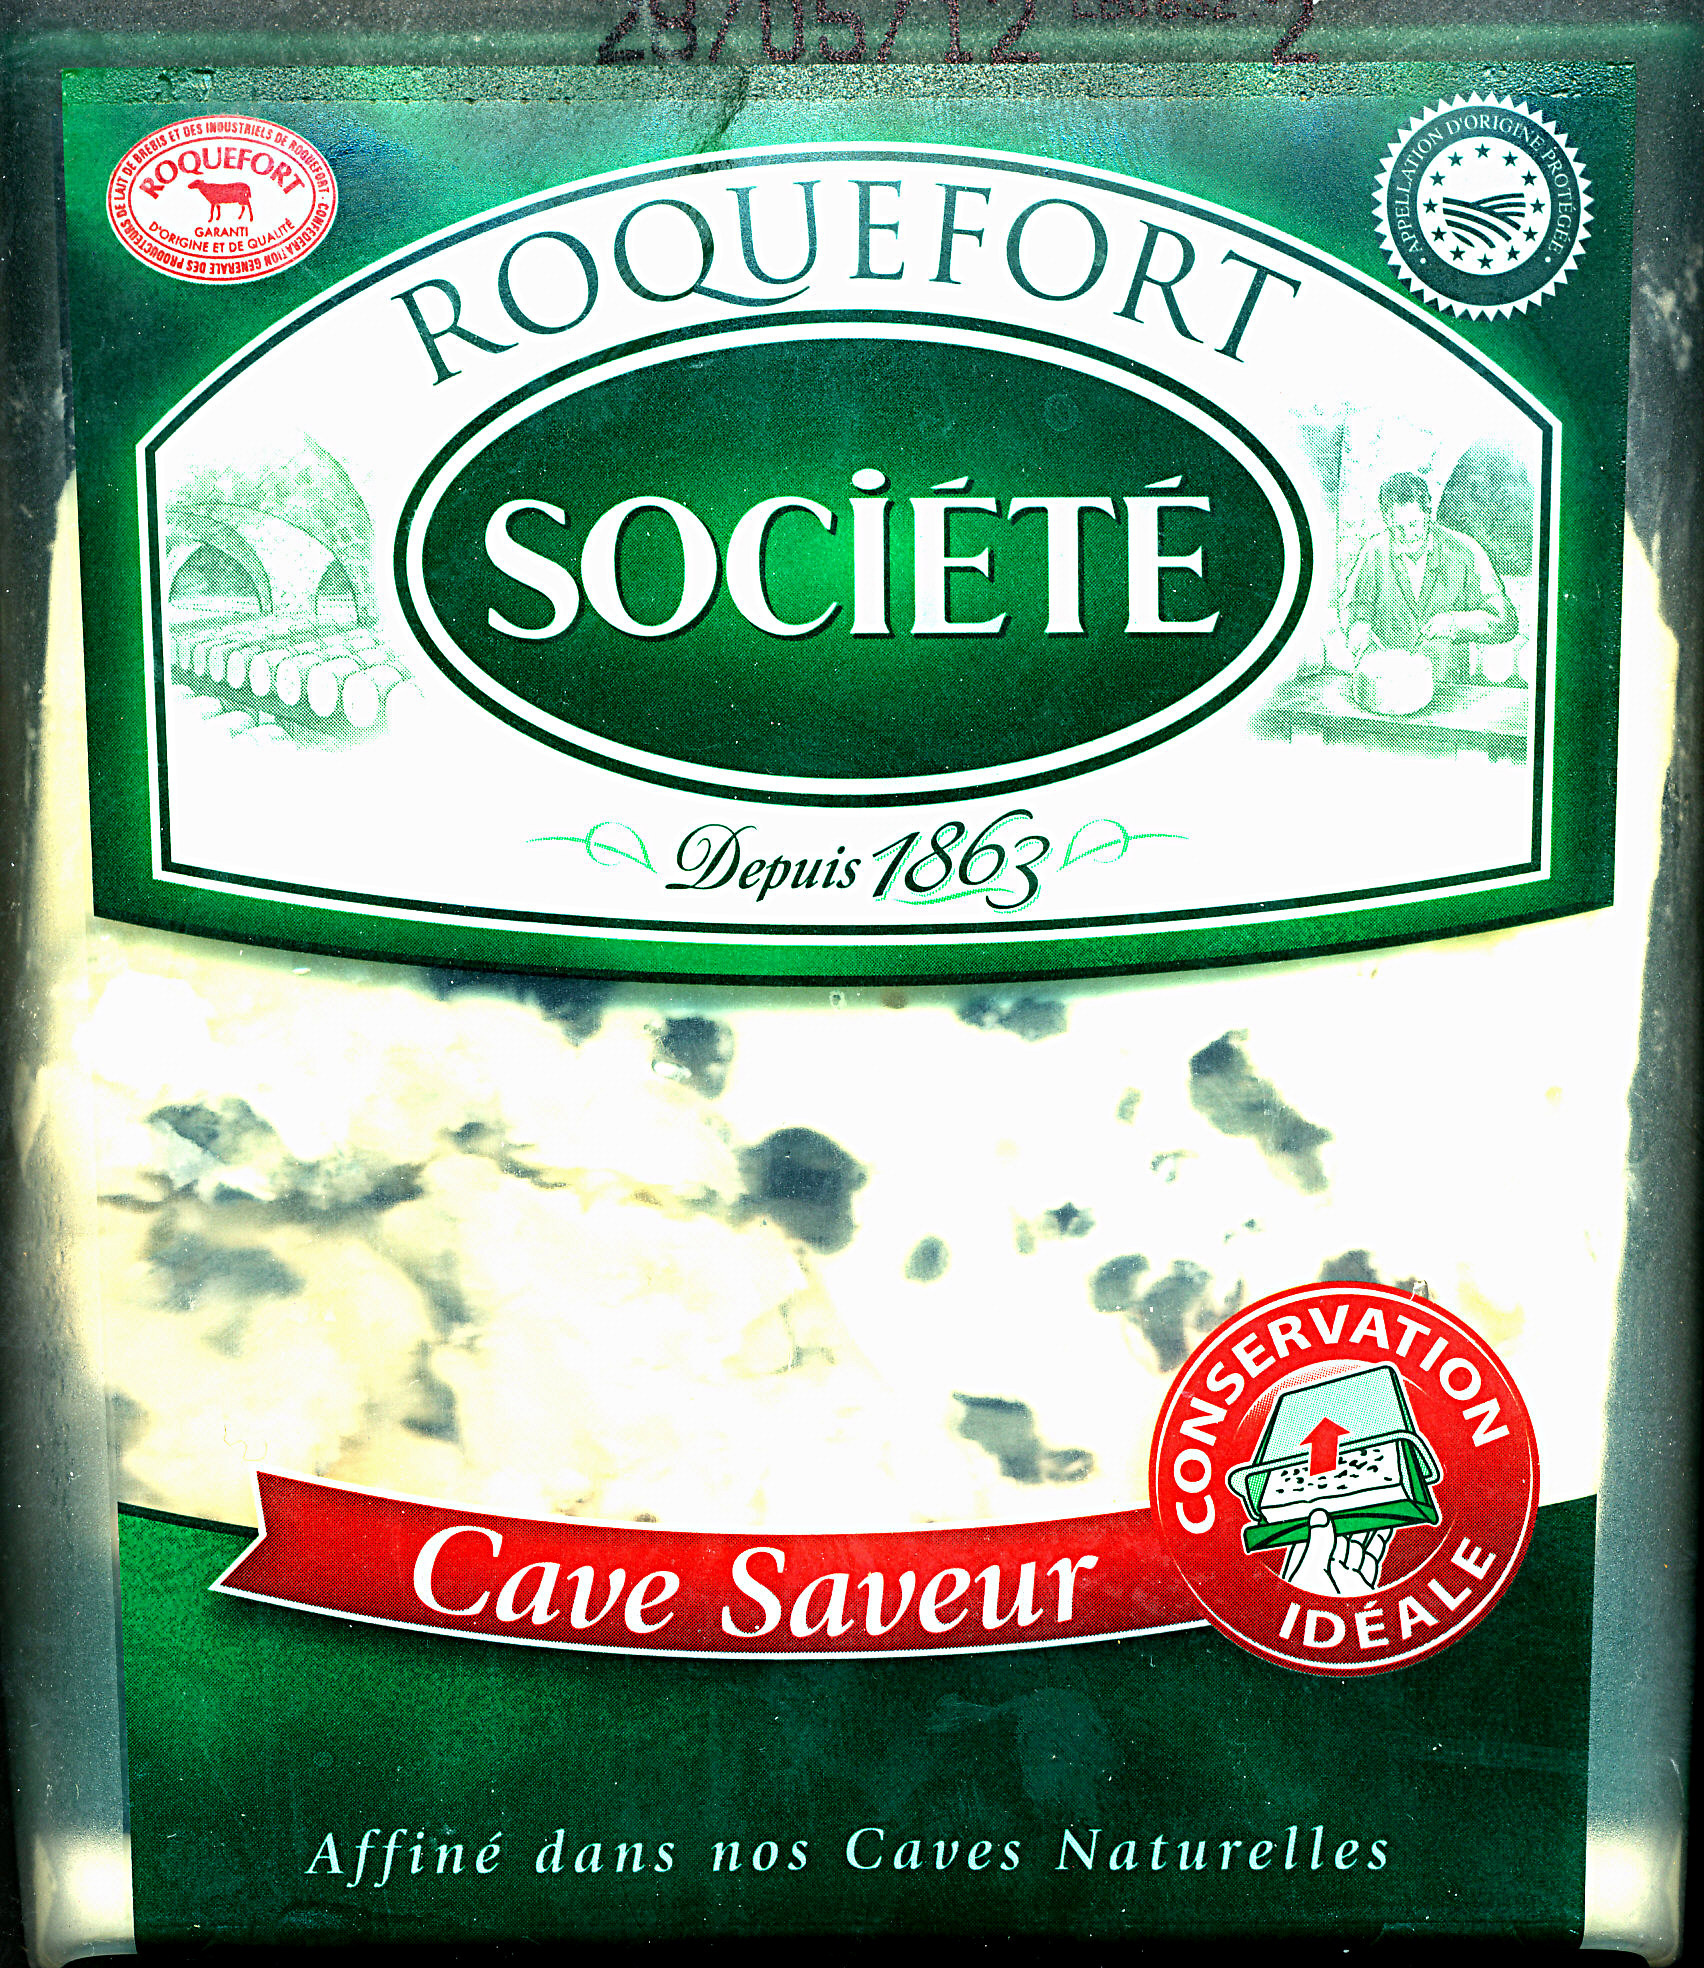 Roquefort AOP Cave Saveur - Produkt - fr